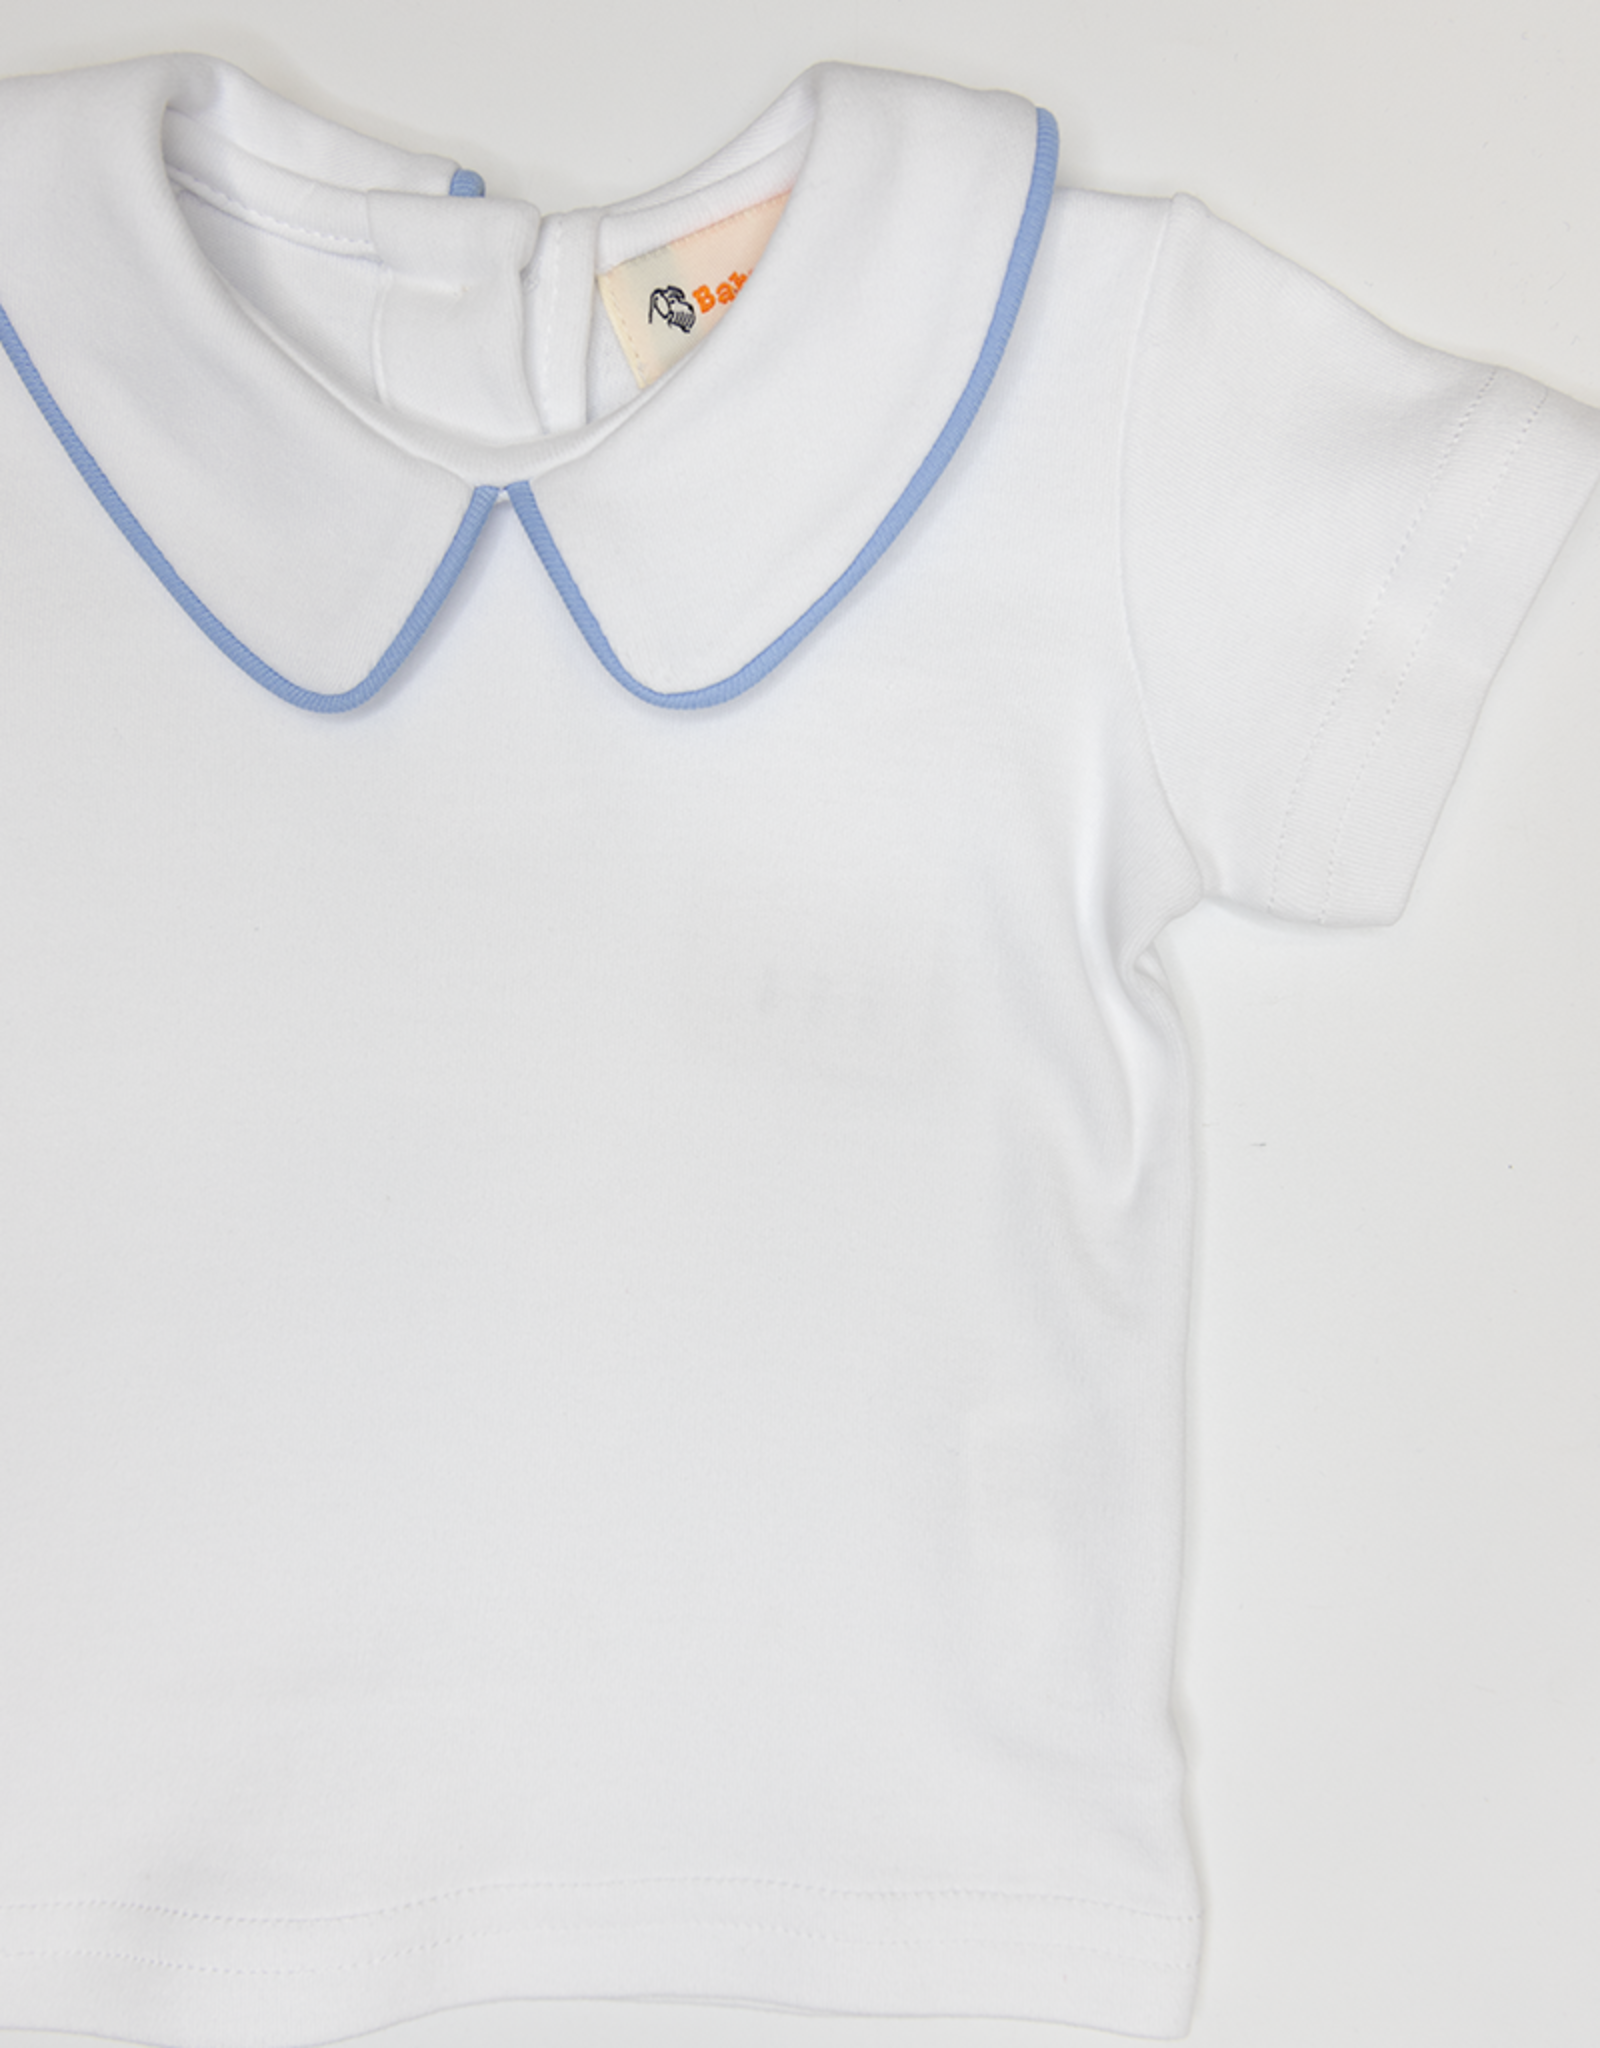 Luigi KB070 SS Collared Shirt White/Blue